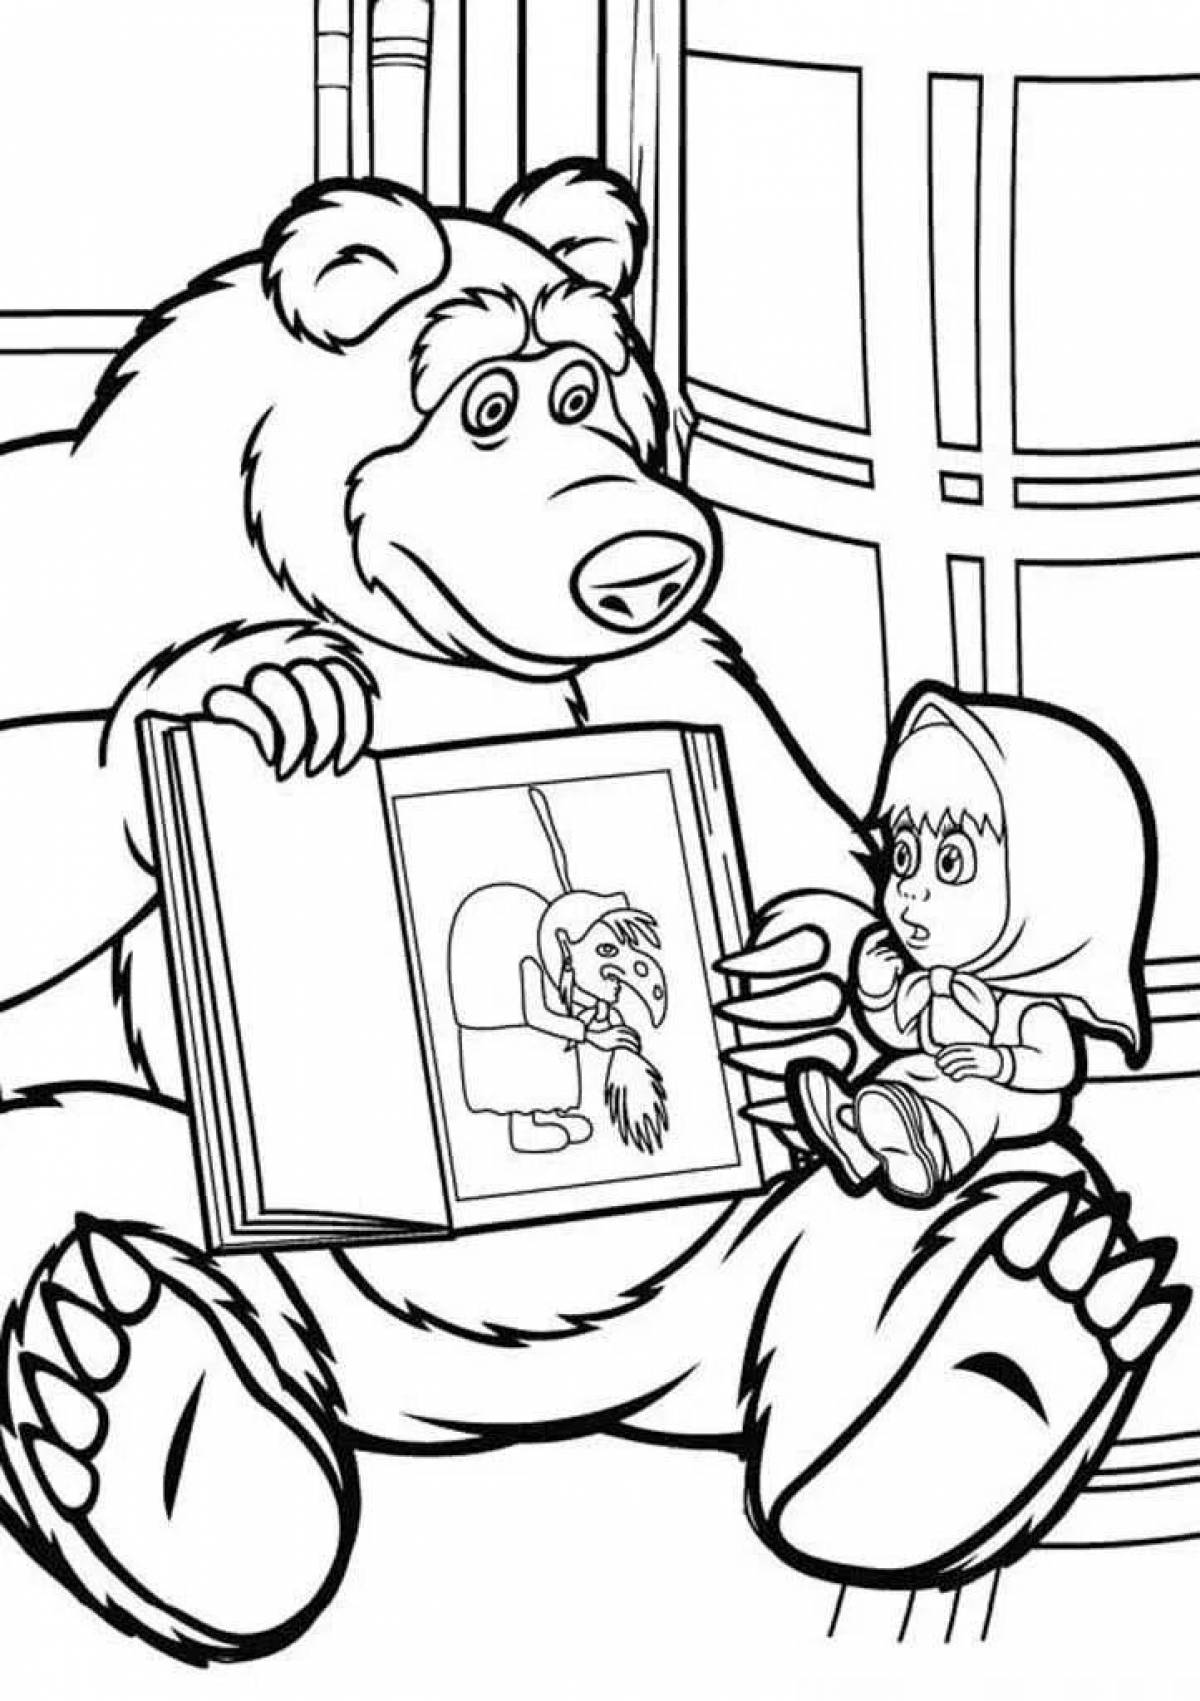 Glorious masha and the bear coloring book